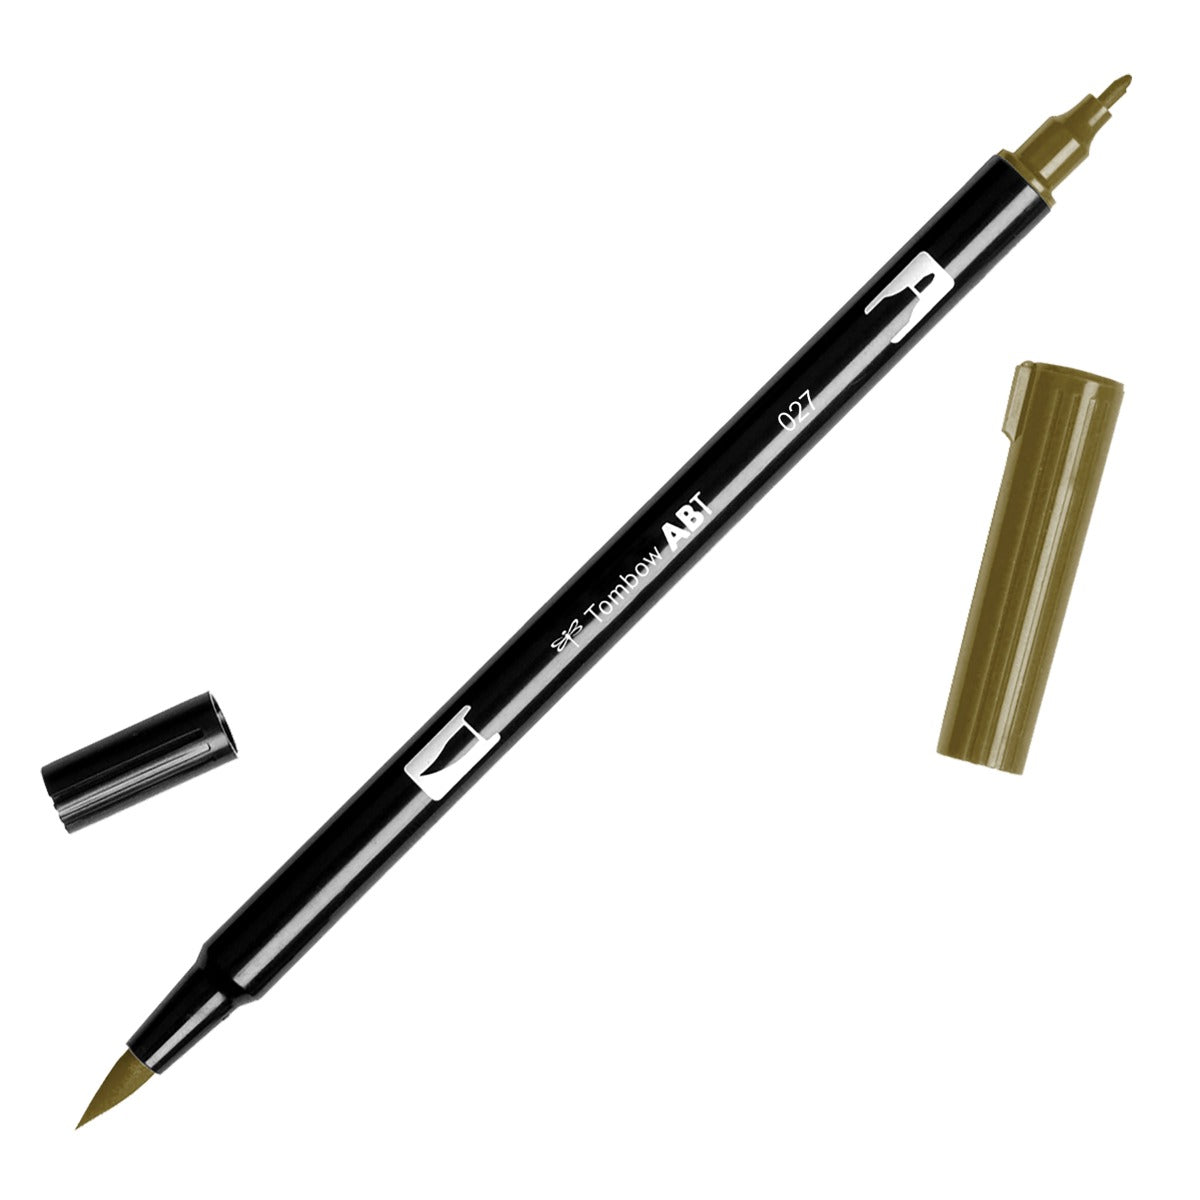 Tombow Dual Brush Pen 027 Dark Ochre